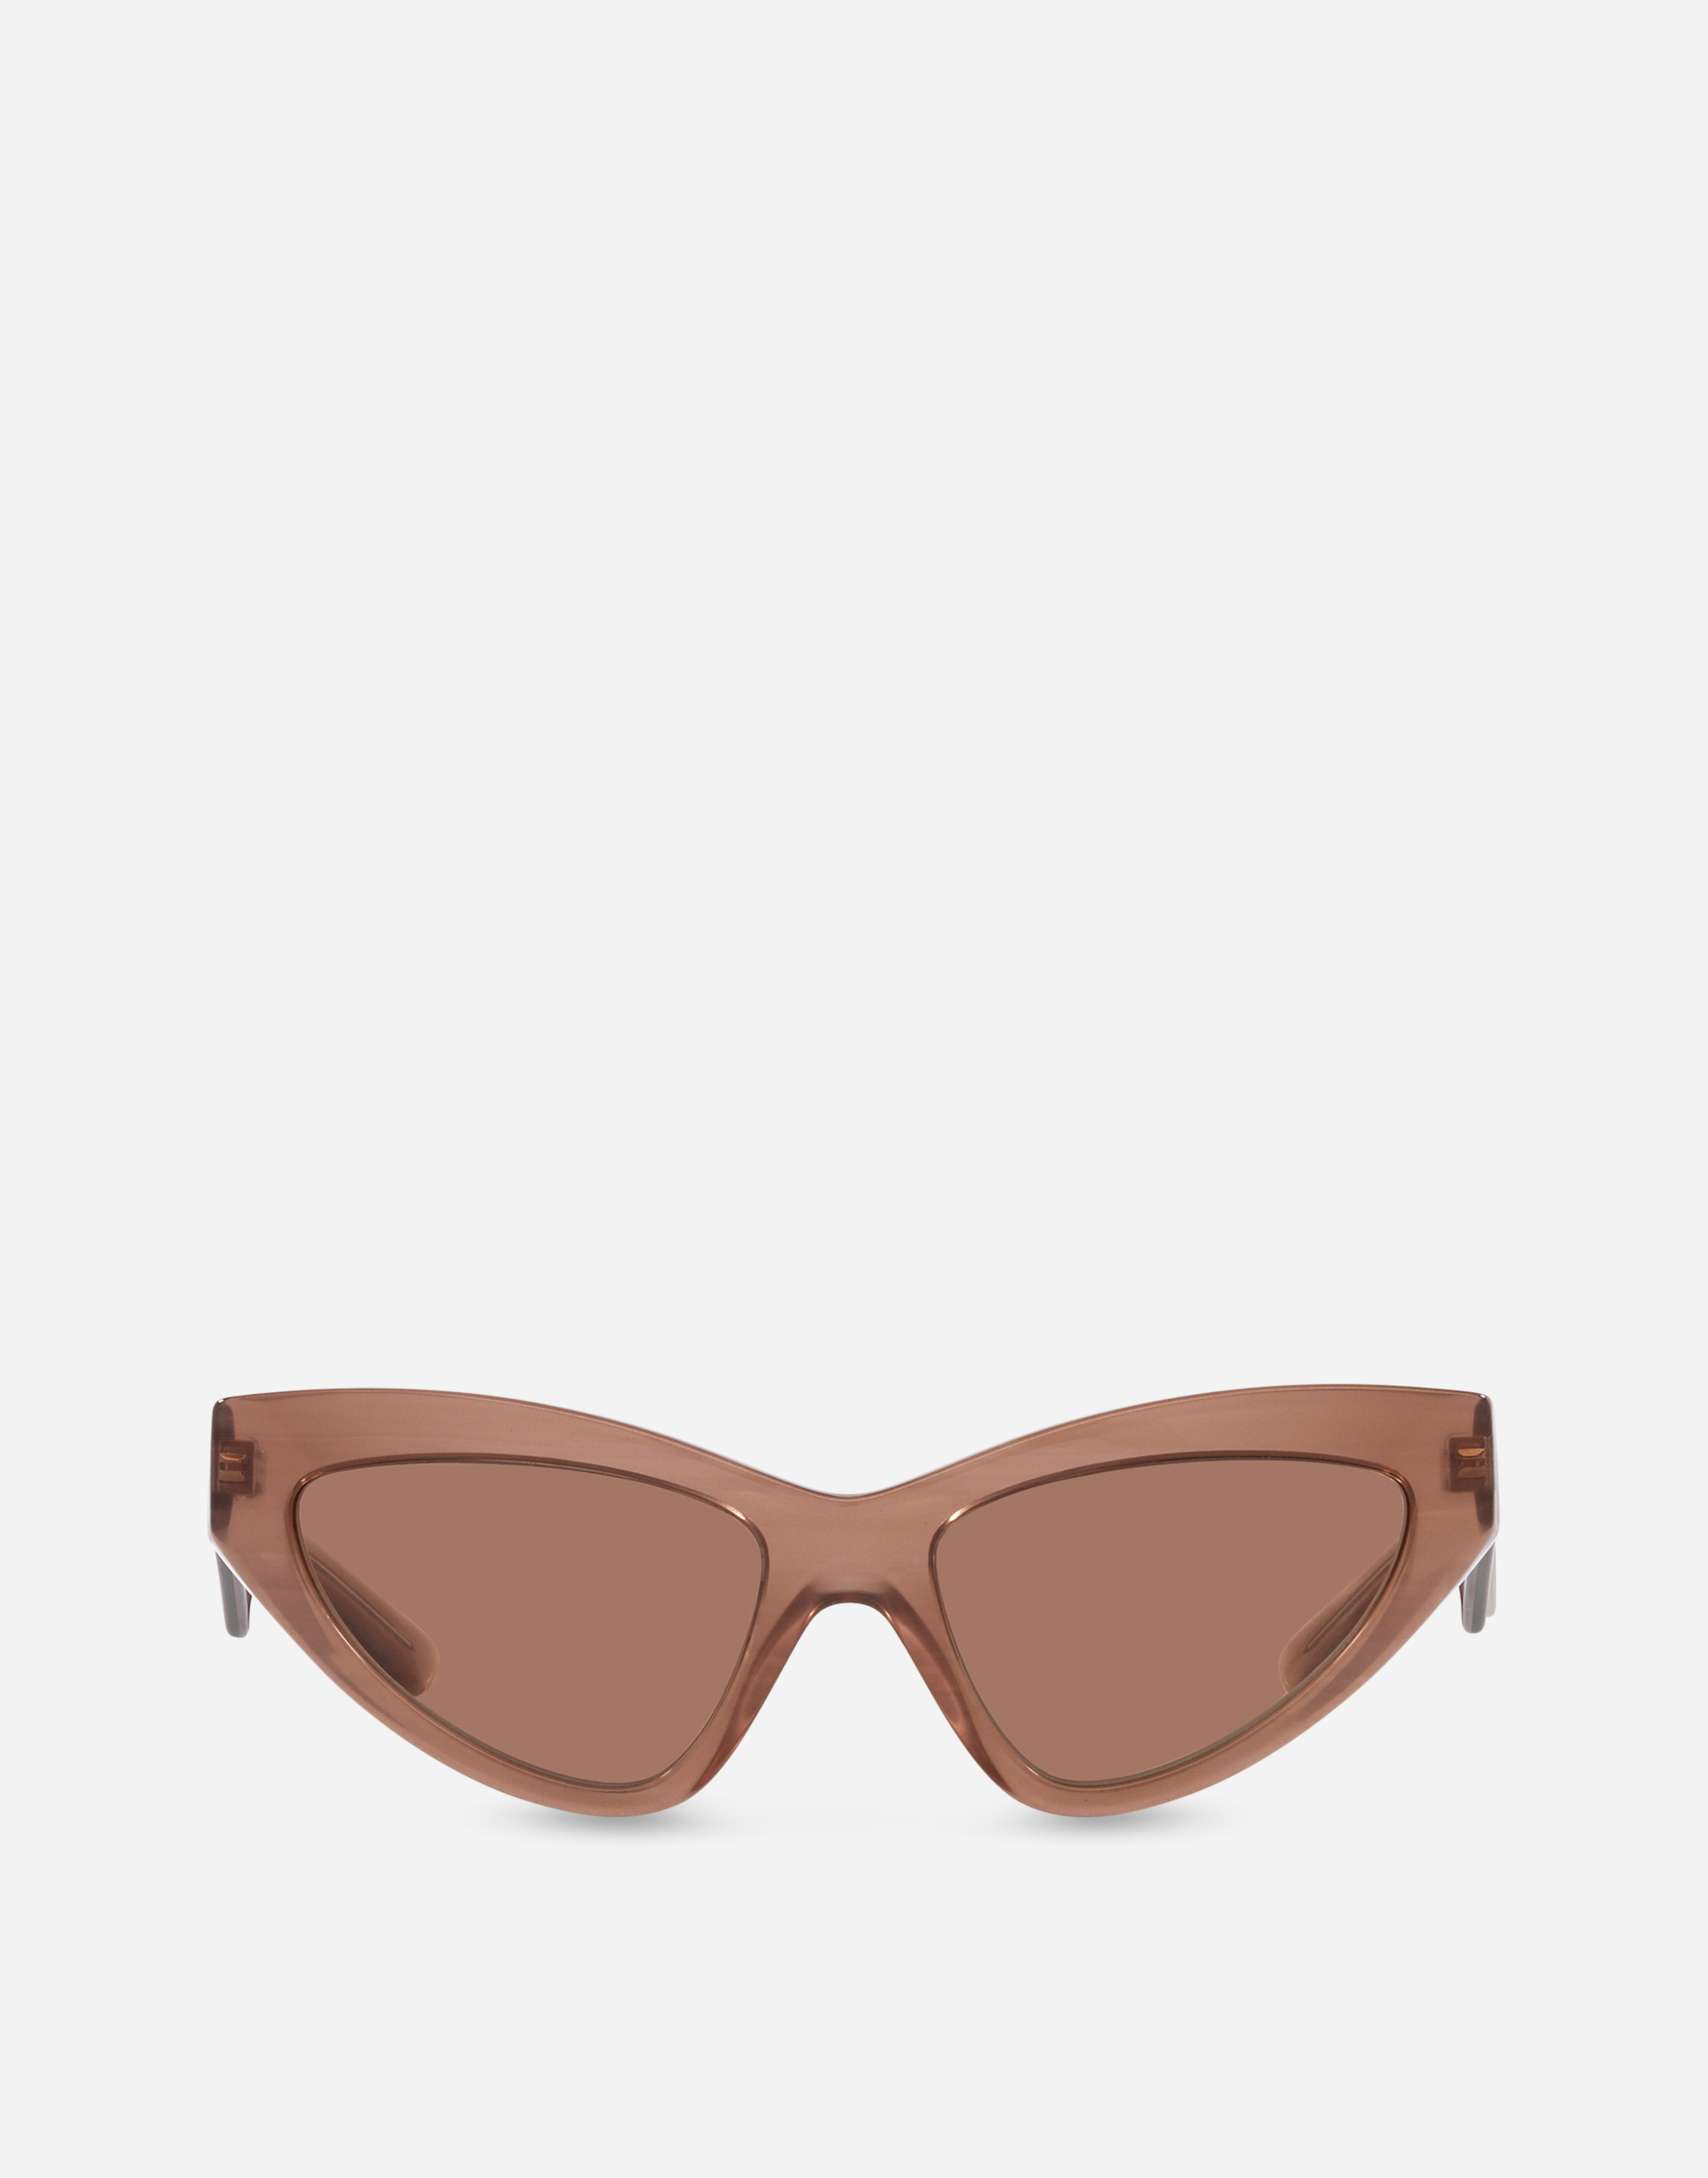 DG Crossed Sunglasses in Fleur caramel